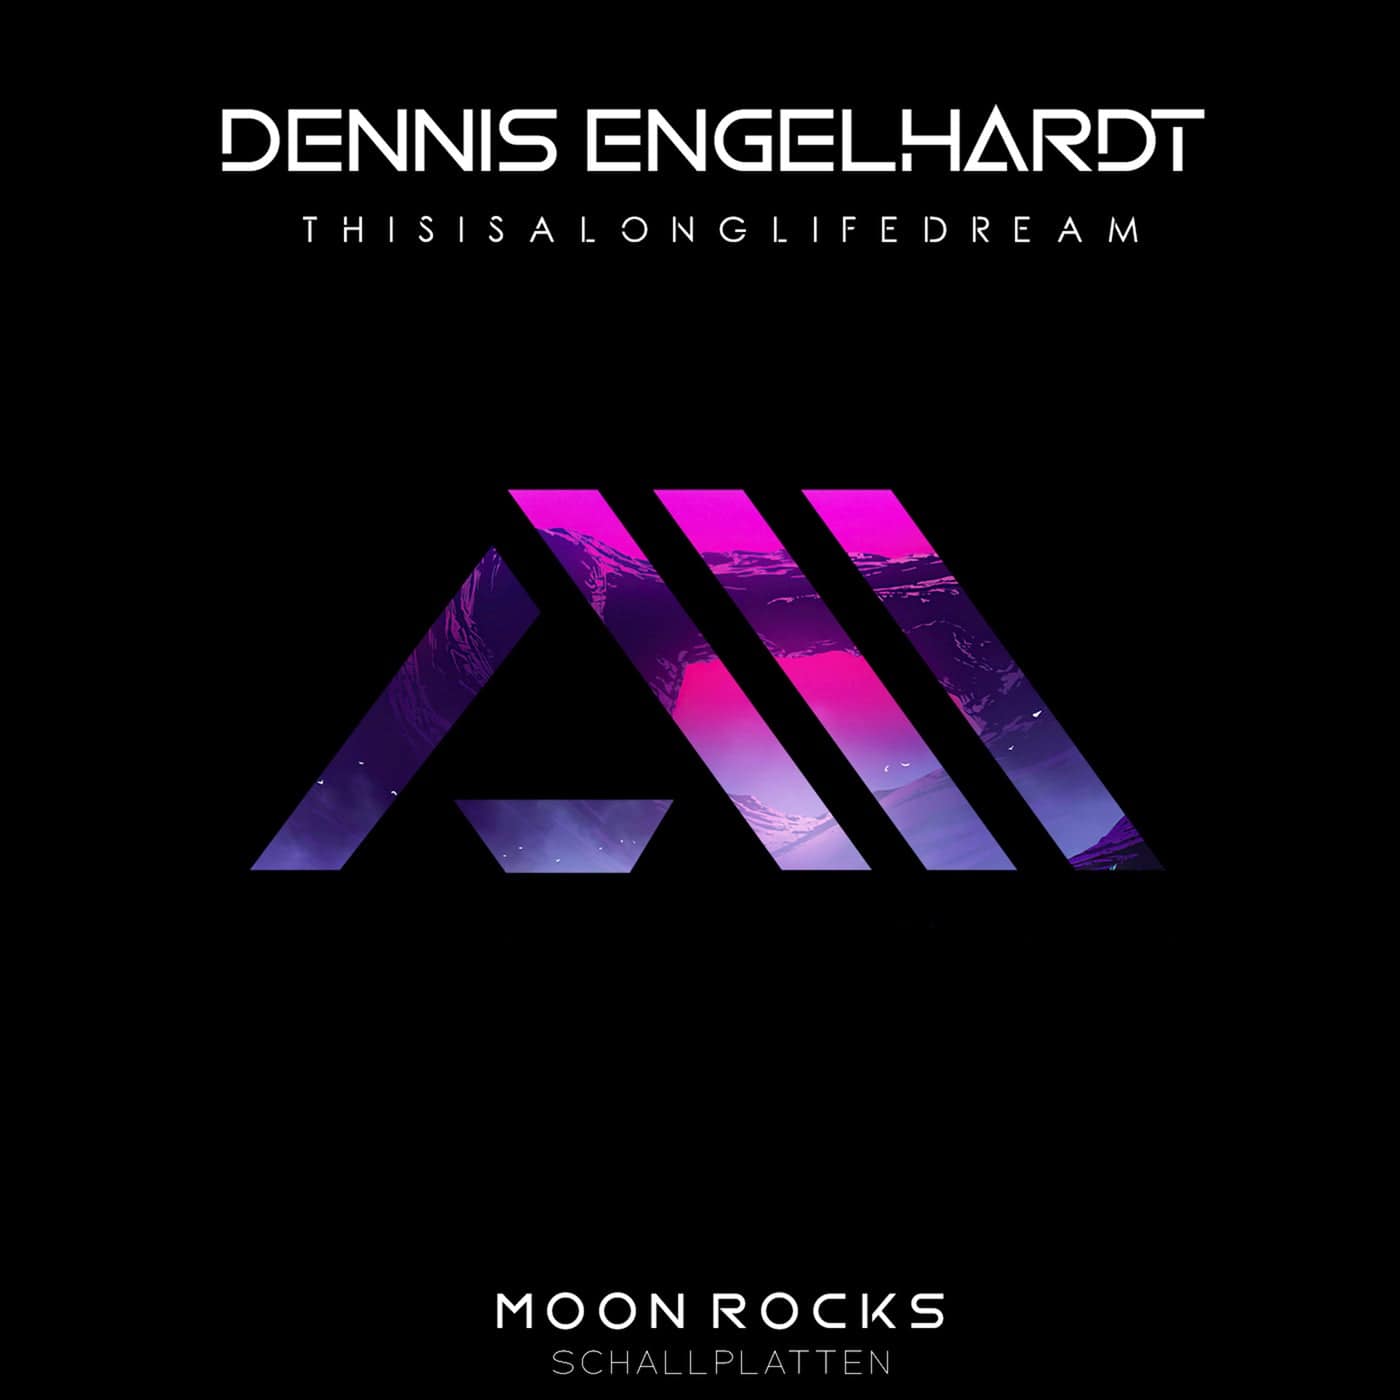 image cover: Dennis Engelhardt - This Is a Lifelong Dream / MOON028